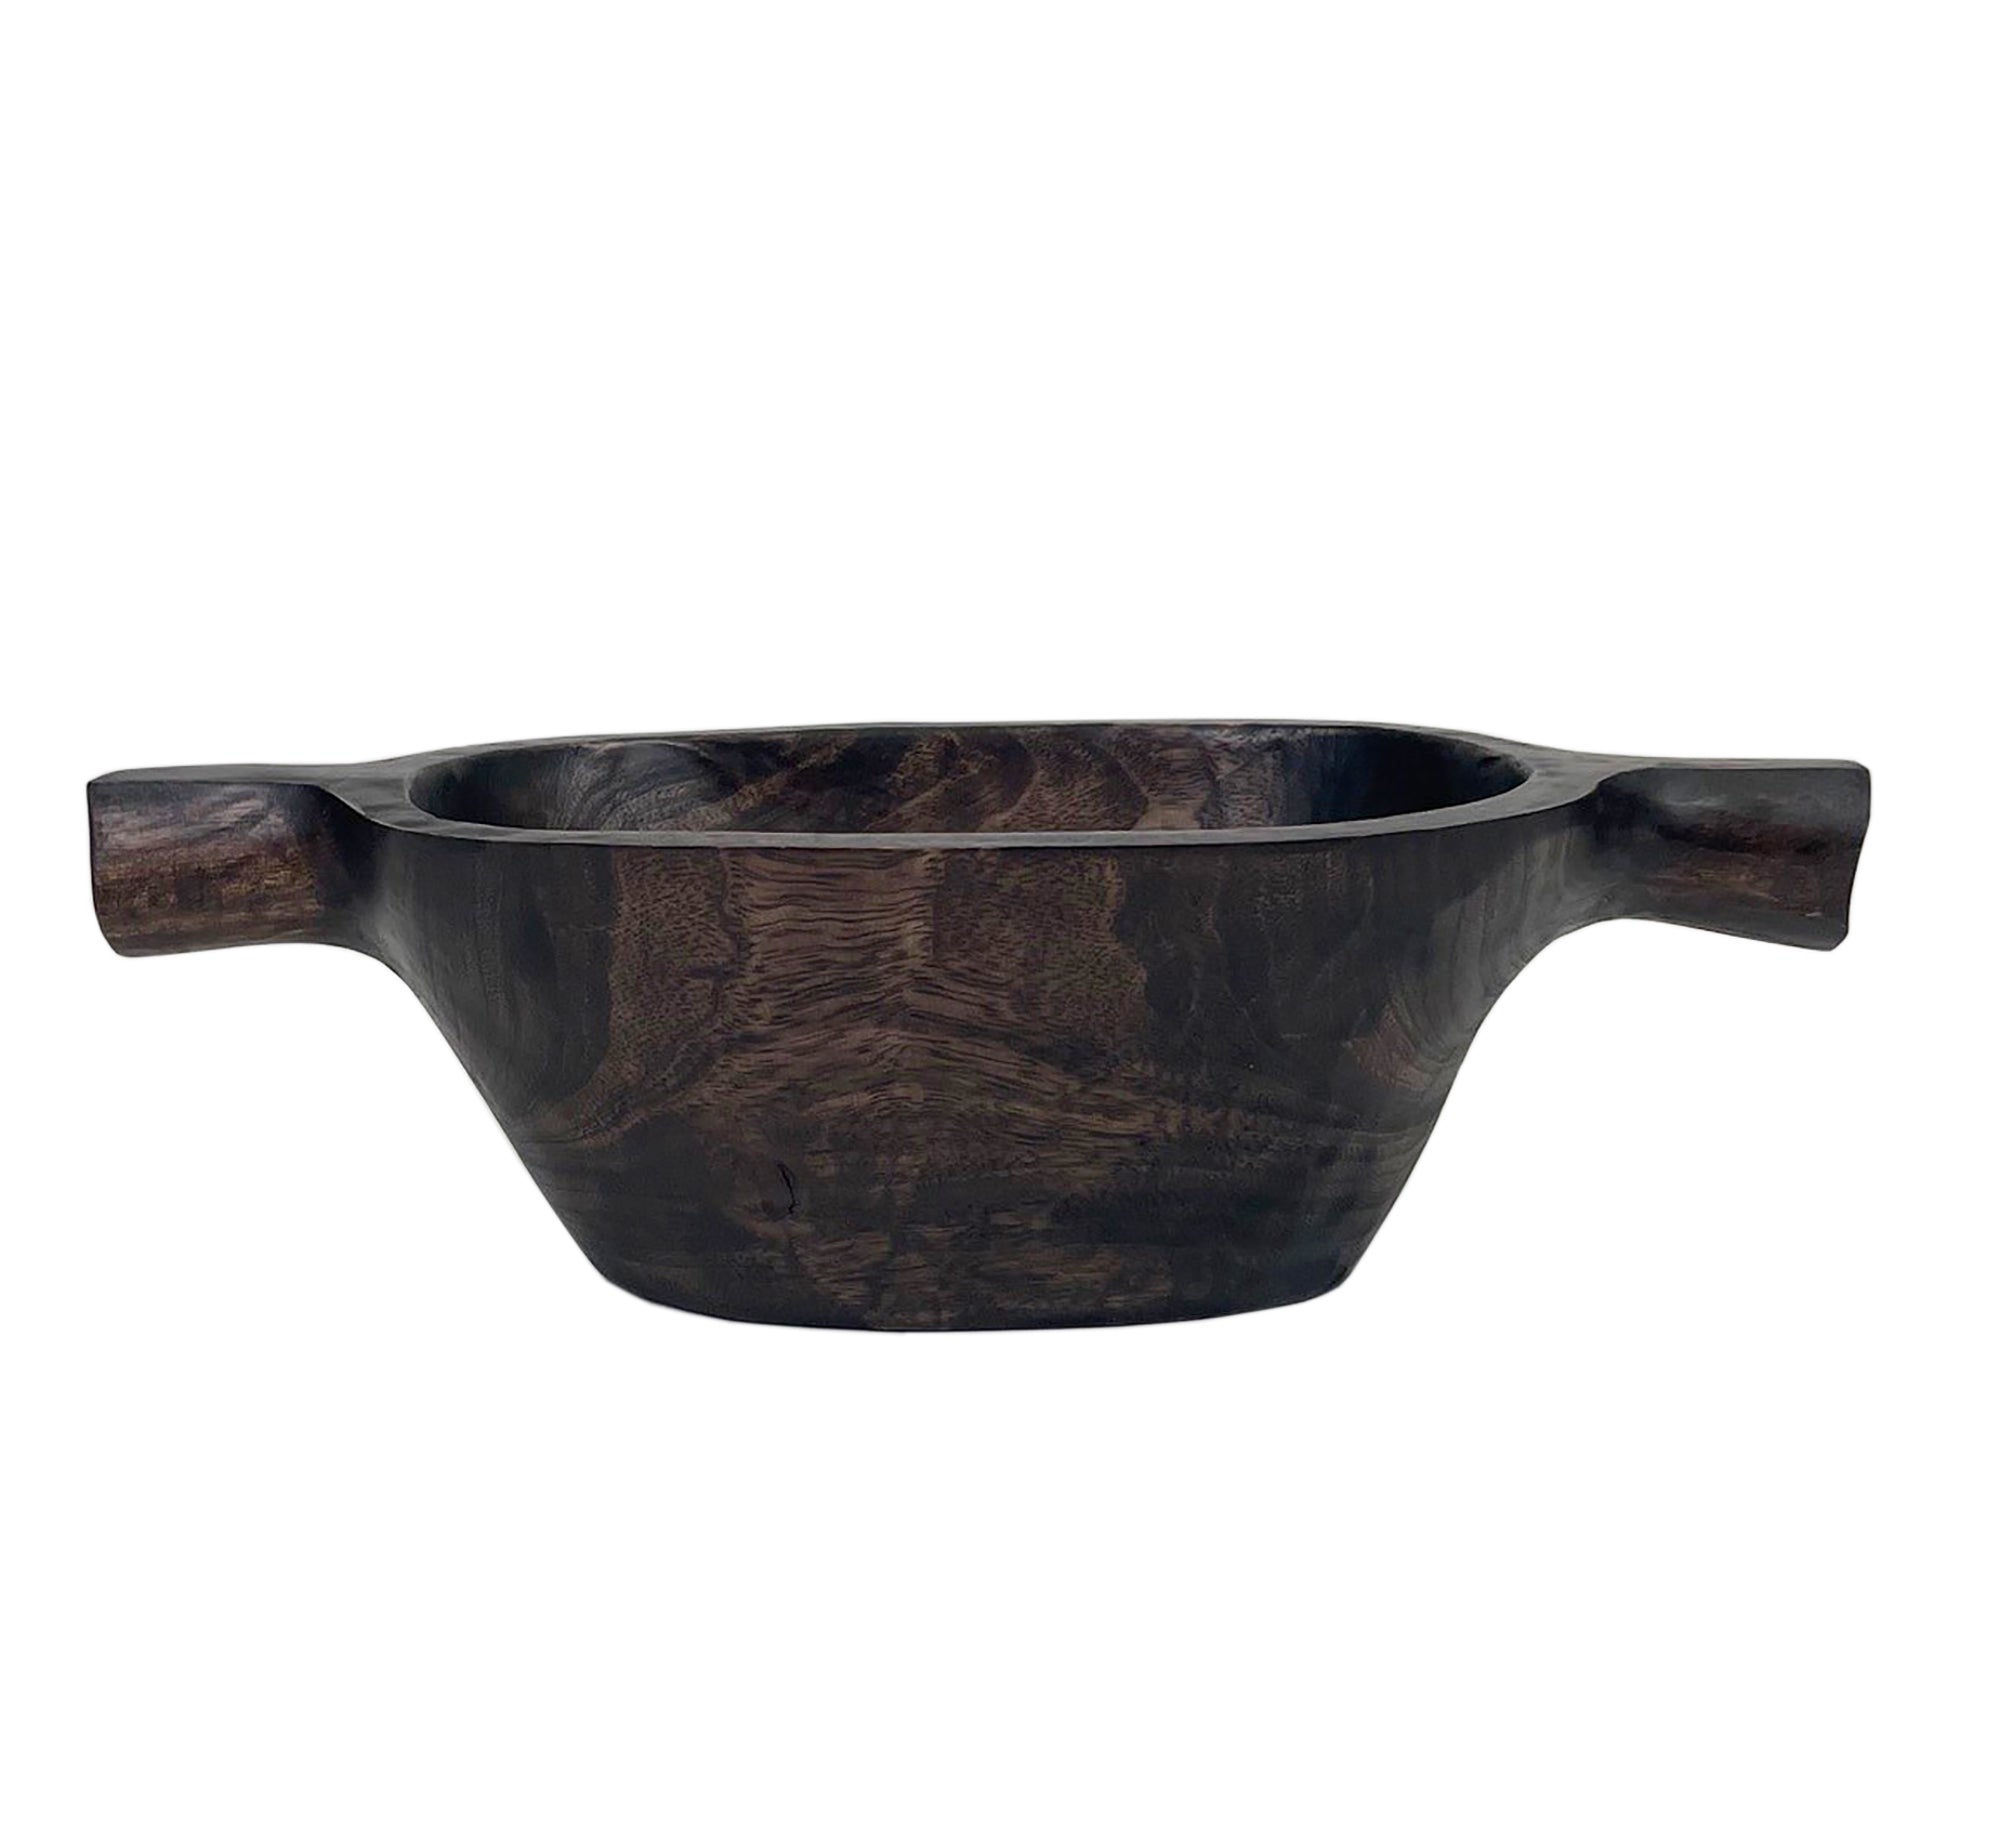 Mango Wood Oval Bowl with Wood Handles